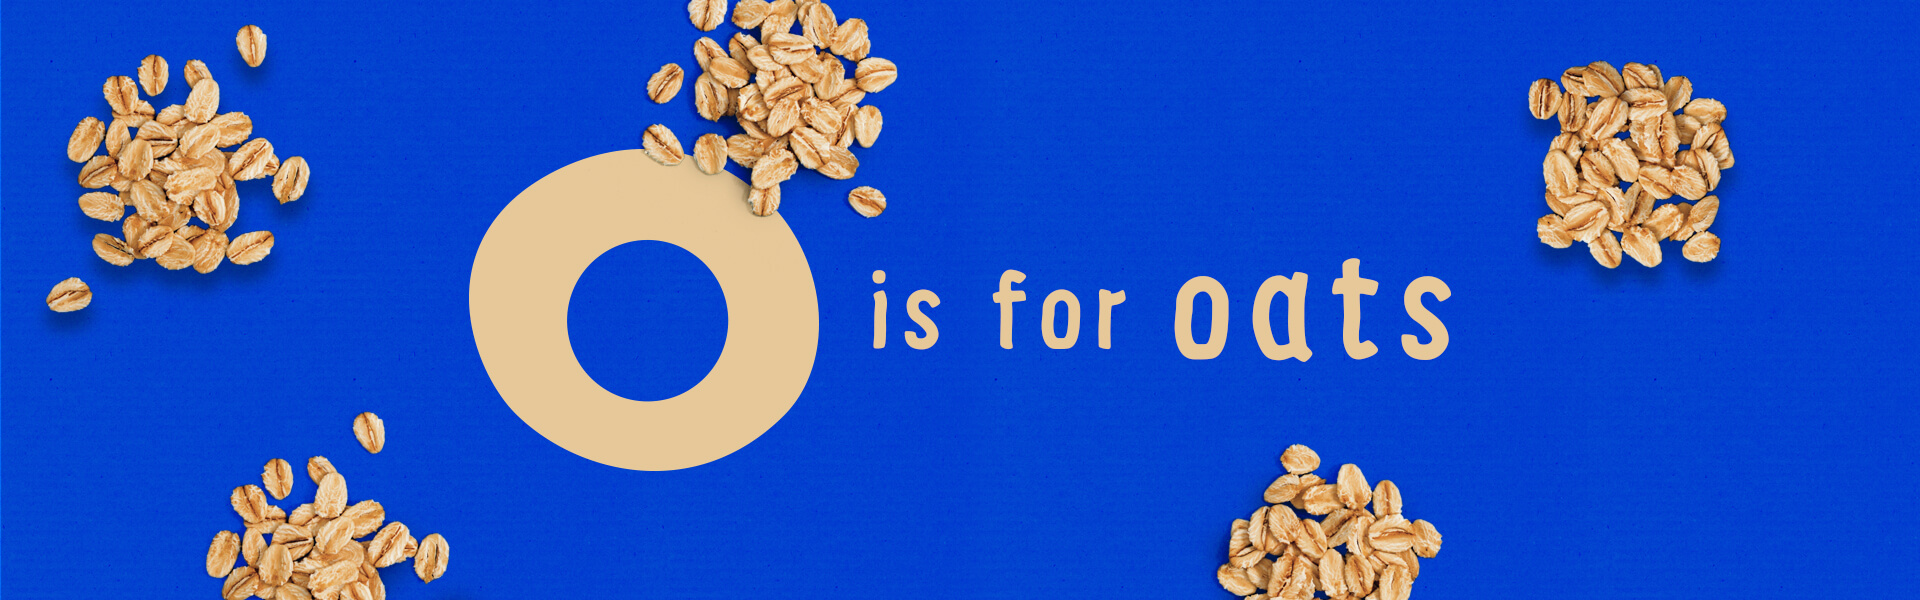 Organix o is for oats